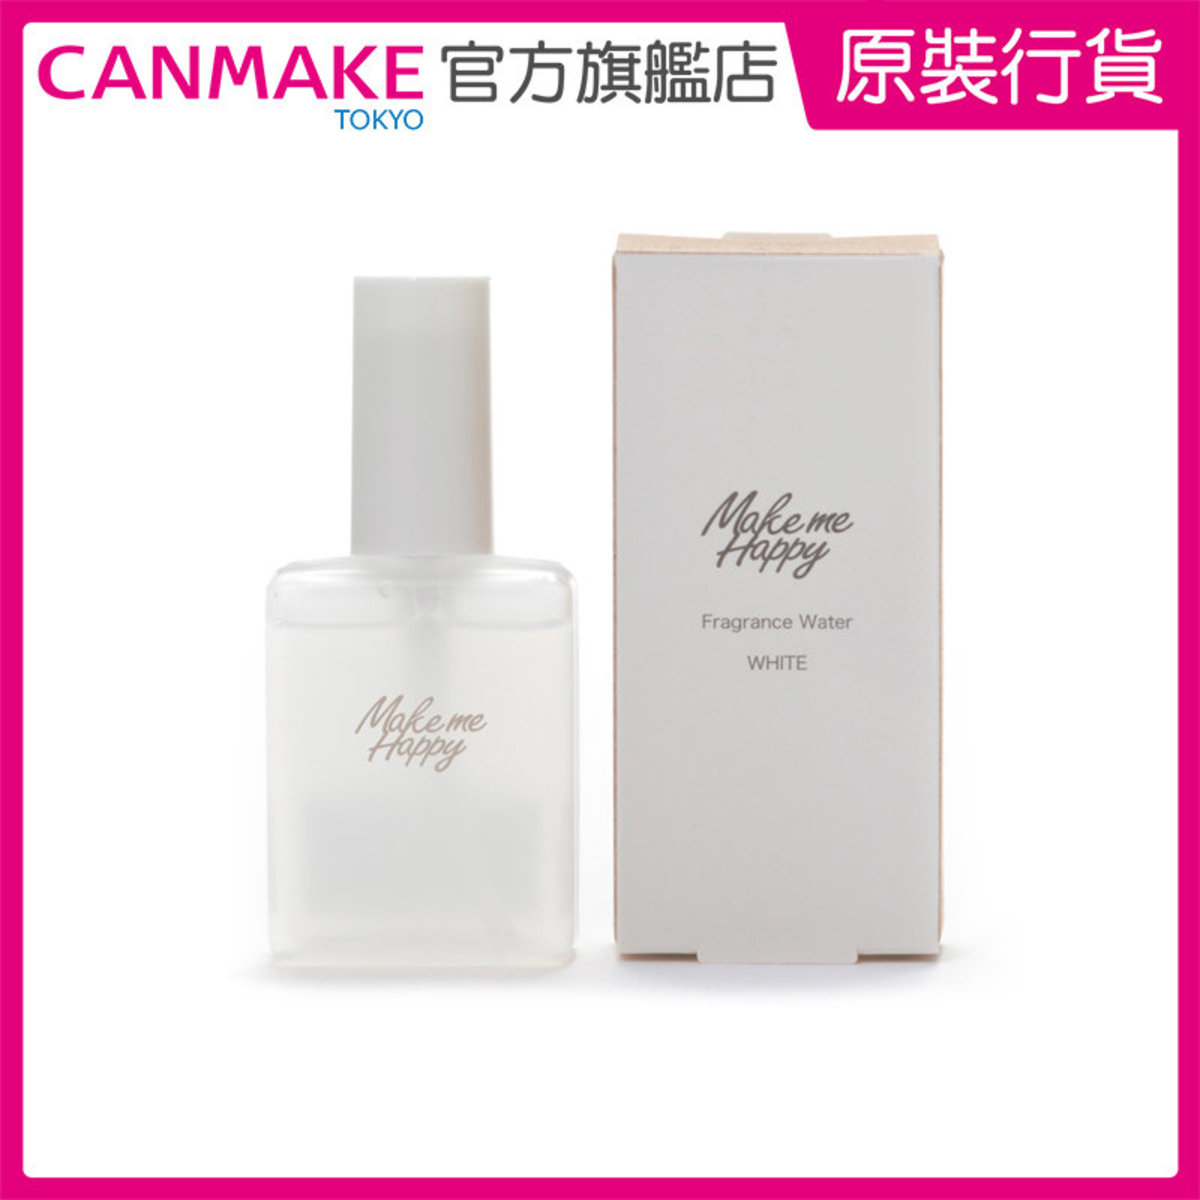 CANMAKE TOKYO | Make Me Happy Fragrance Water 美樂香氣香氛香水